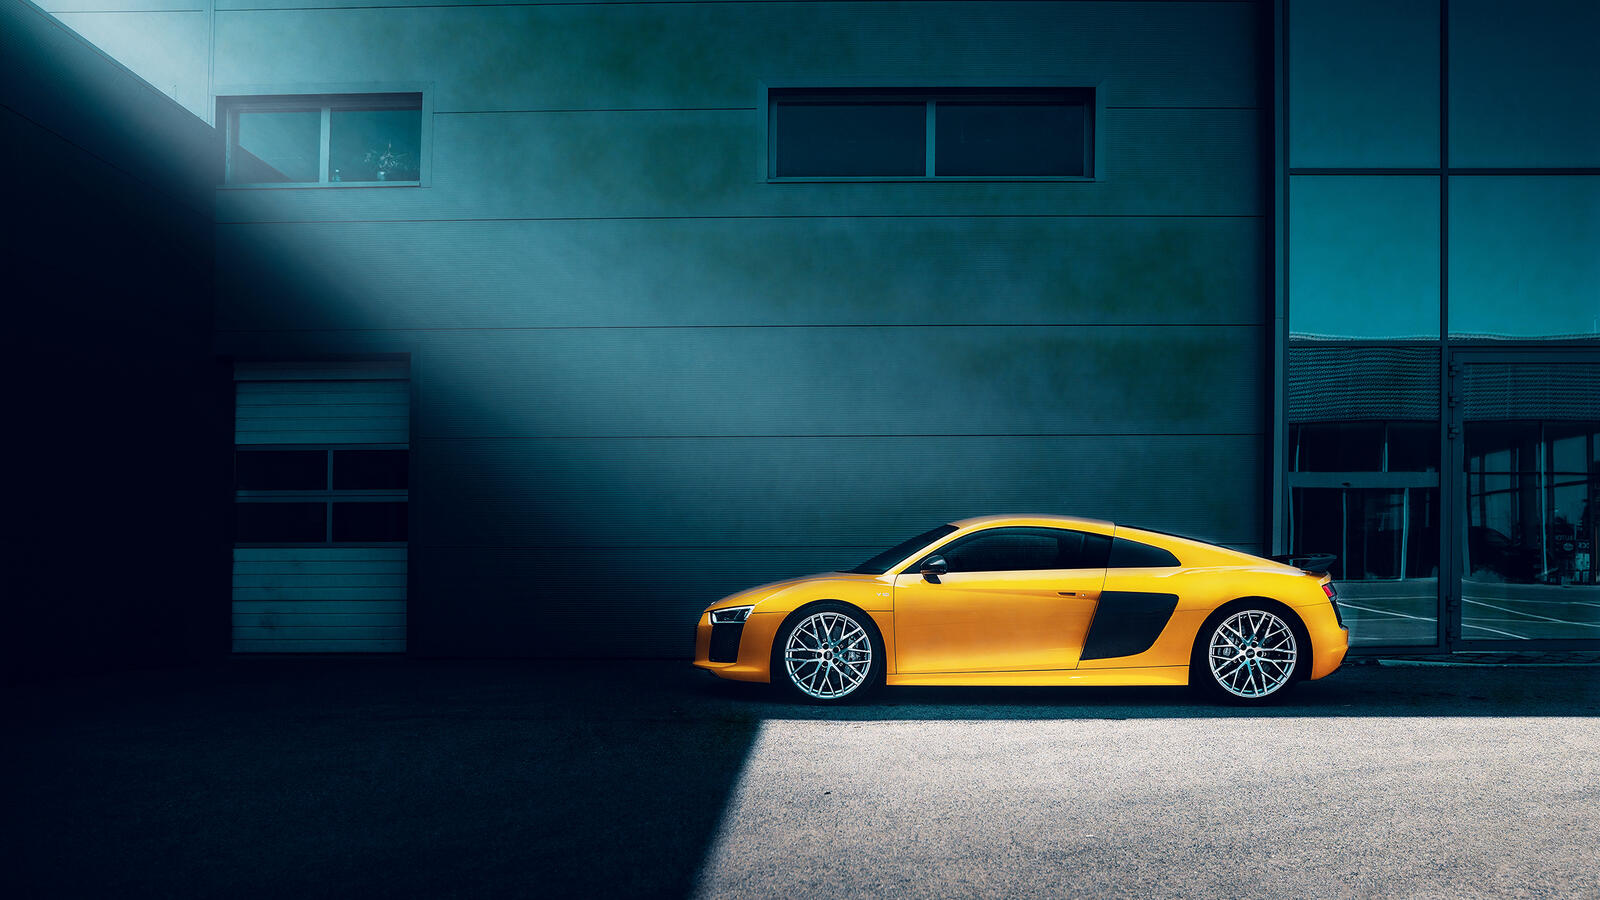 Wallpapers Audi R8 Audi Behance on the desktop